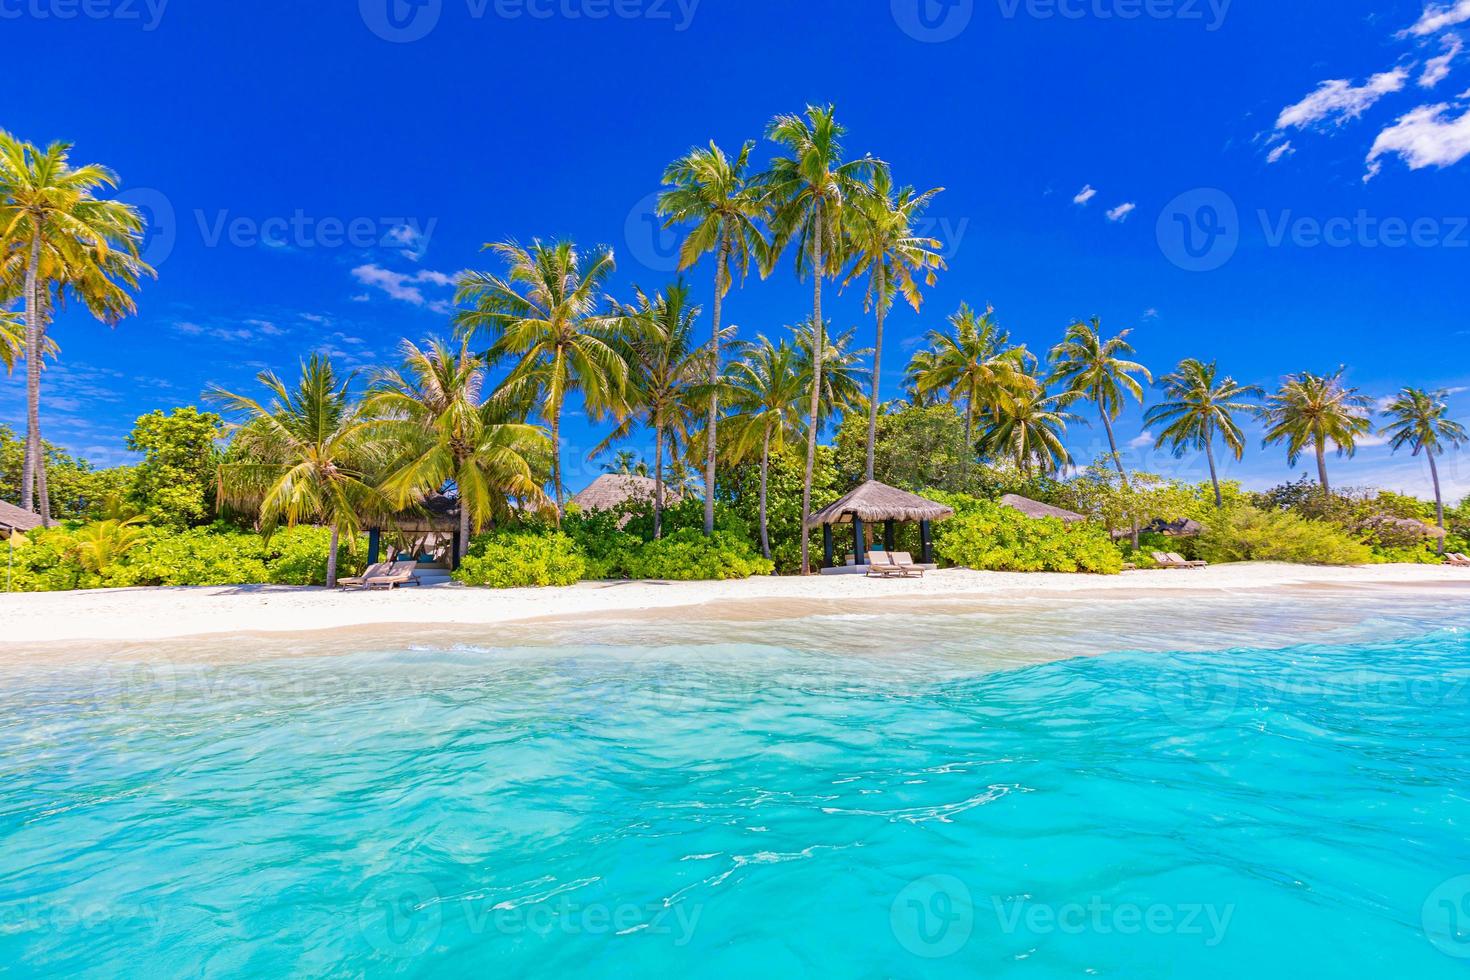 Tropical resort hotel beach paradise. Amazing nature, coast, shore. Summer vacation, travel adventure. Luxury holiday landscape, stunning ocean lagoon, blue sky palm trees. relax idyllic inspire beach photo